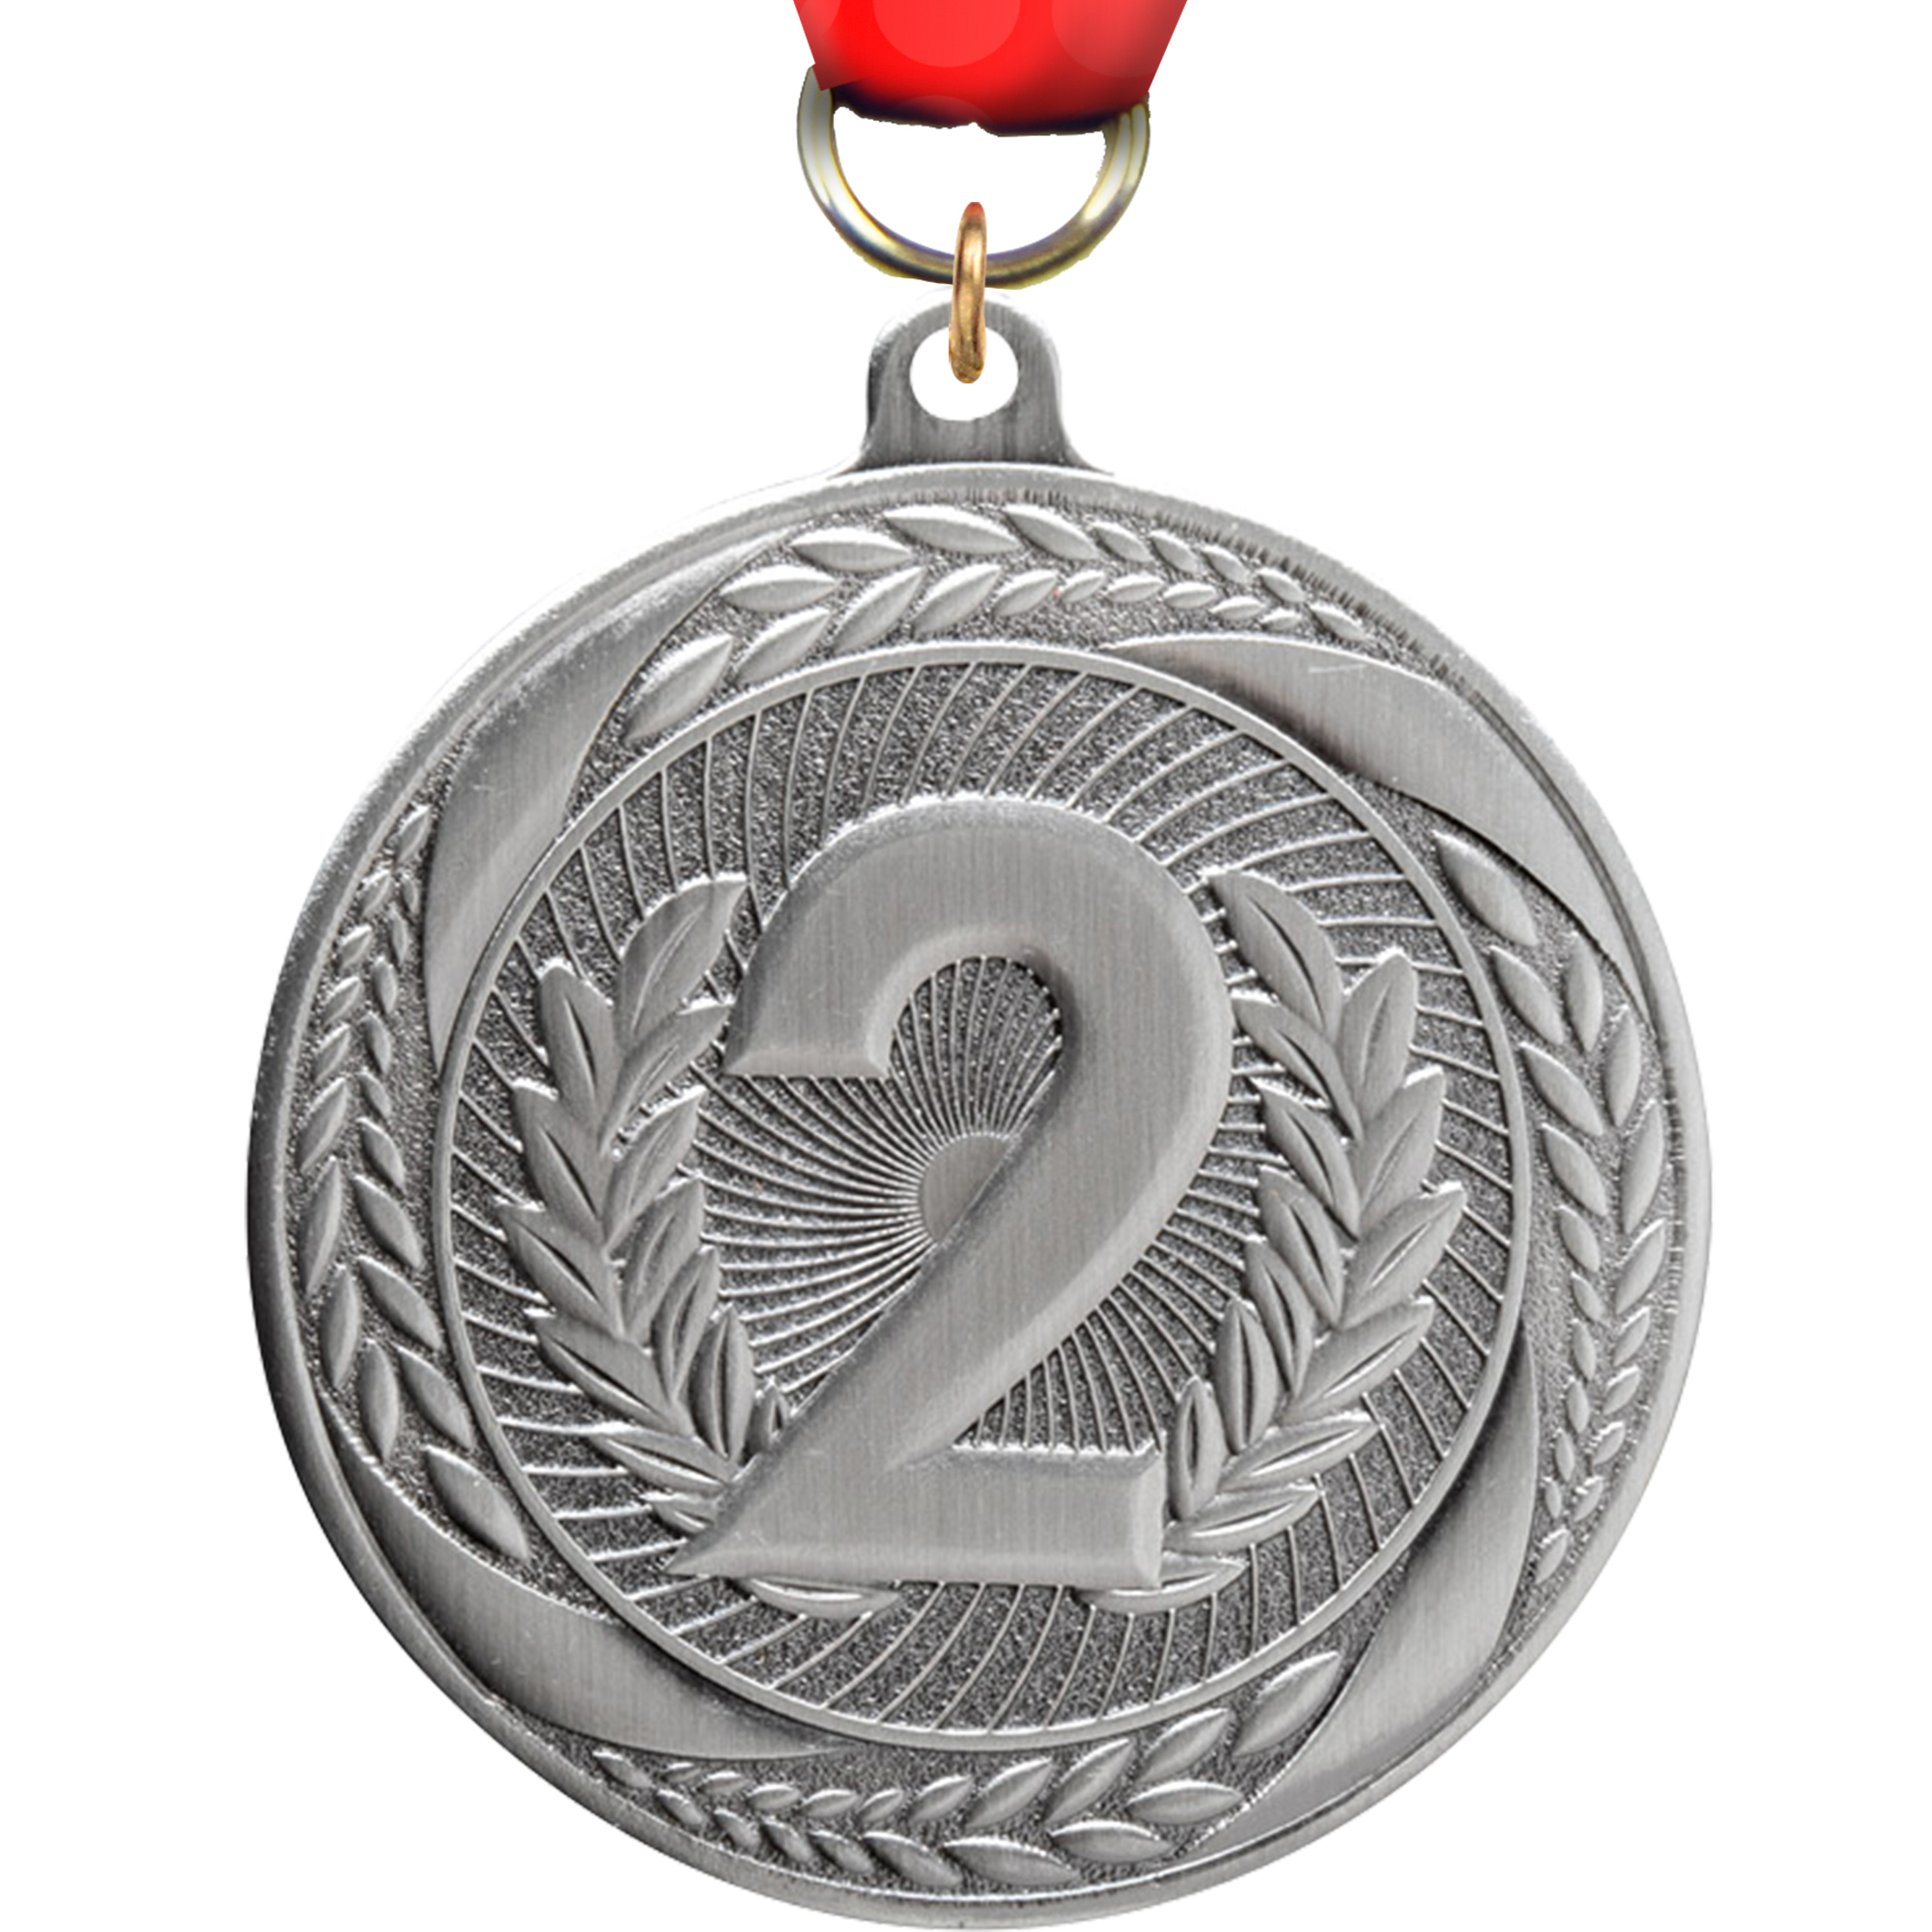 2nd Laurel Wreath Medal